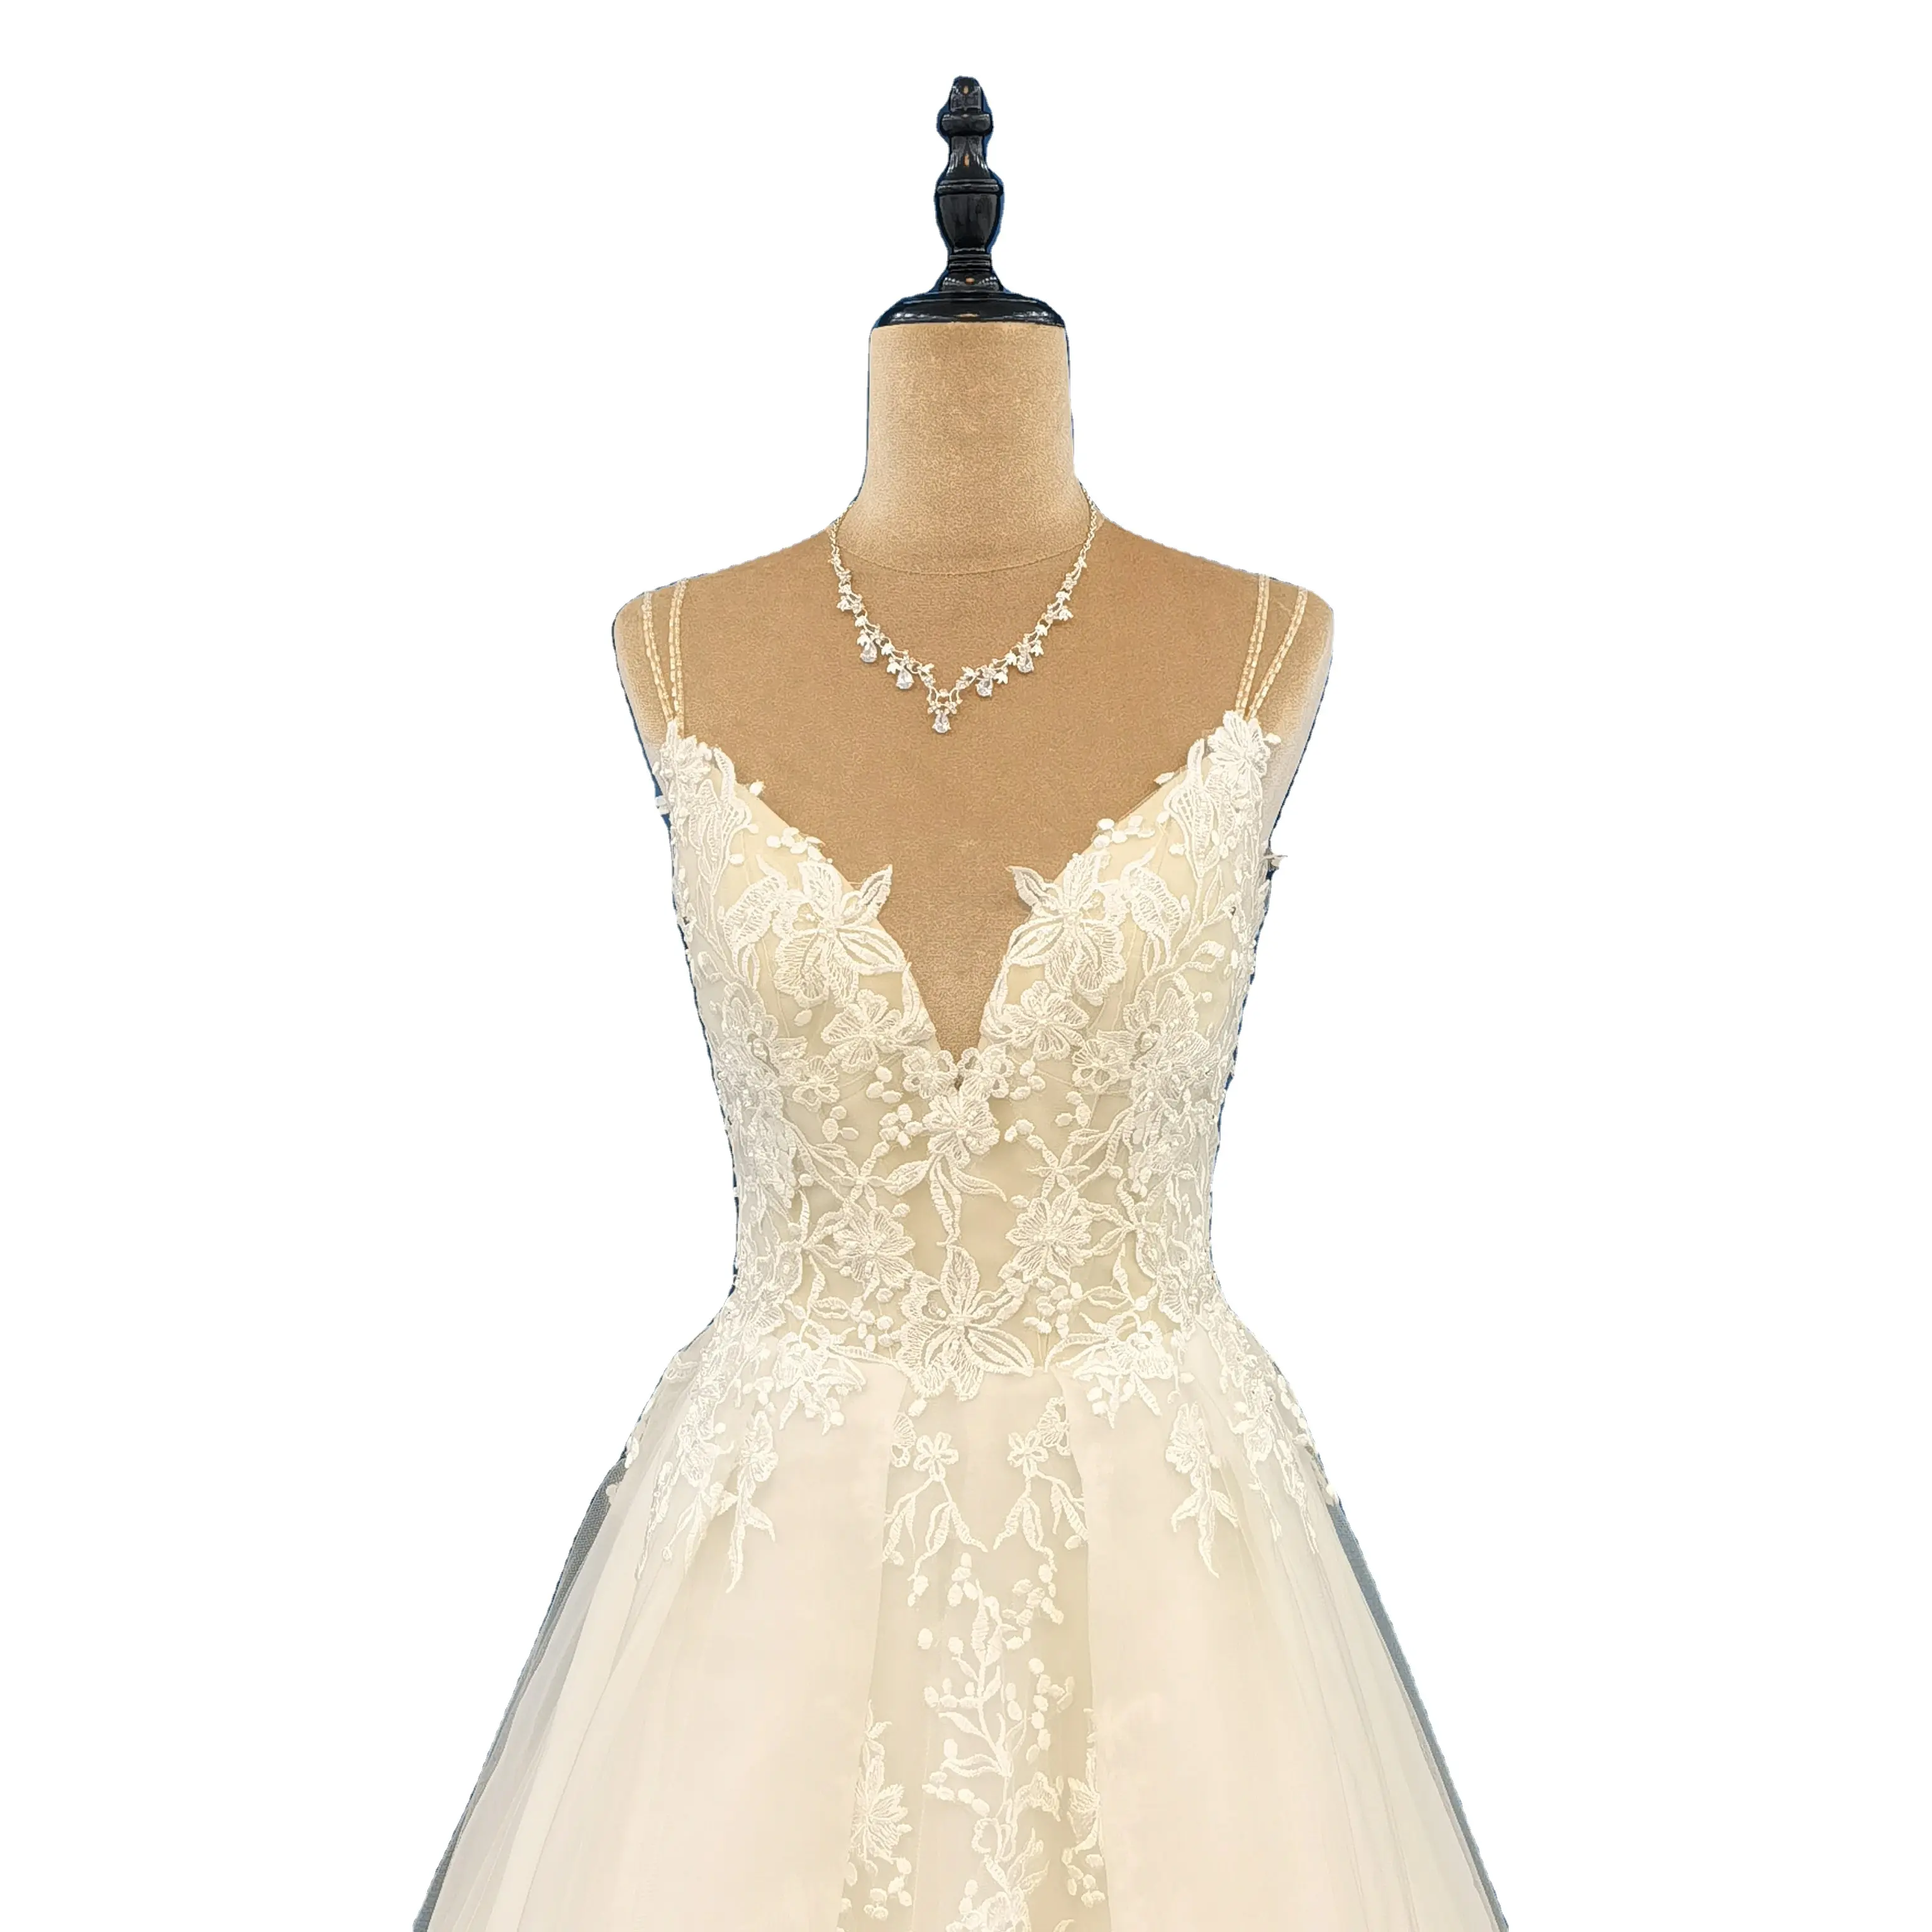 The New Listing Bridal Gown Evening Fabric White Women Elegant Wedding Dress